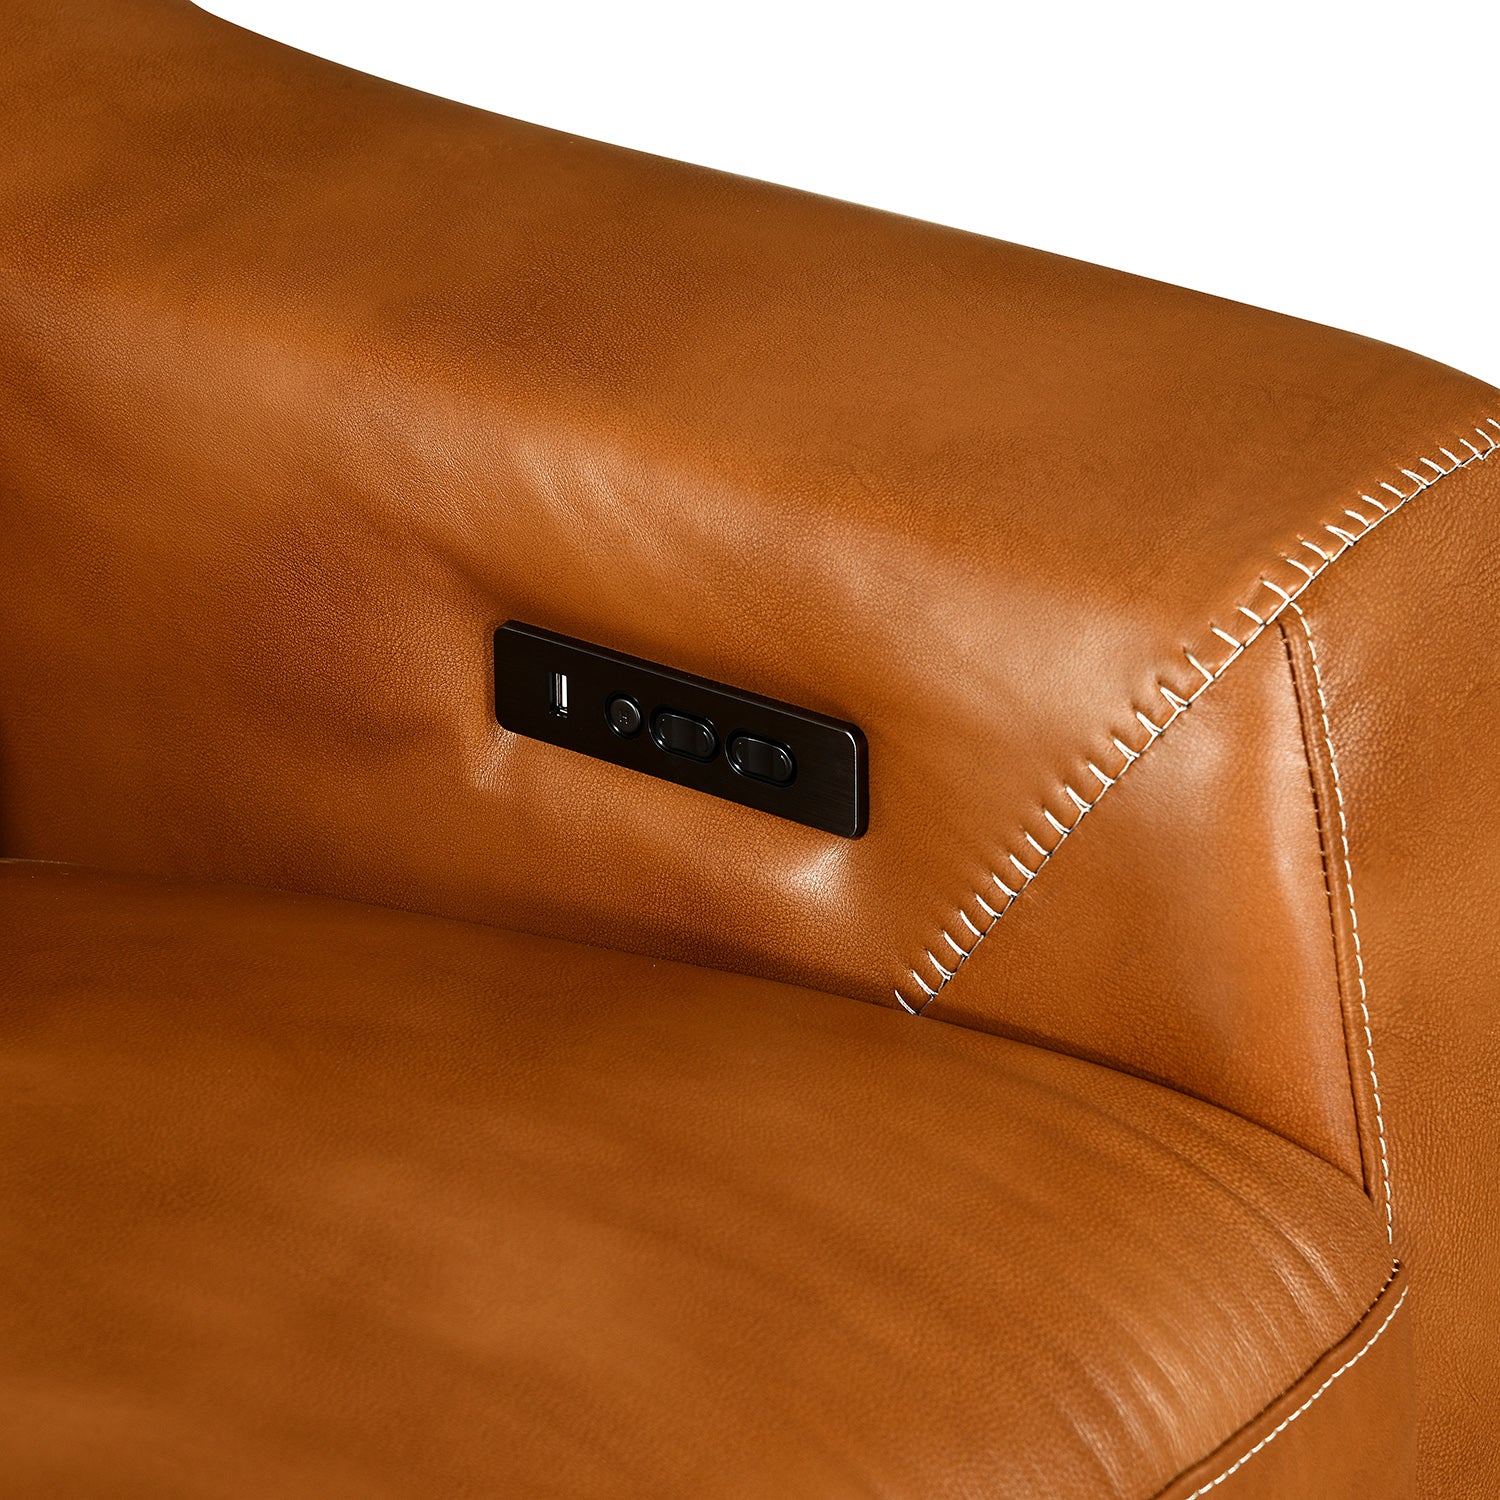 Olympus 2 Seater Adjustable Headrest Power Recliner Sofa (Tan)